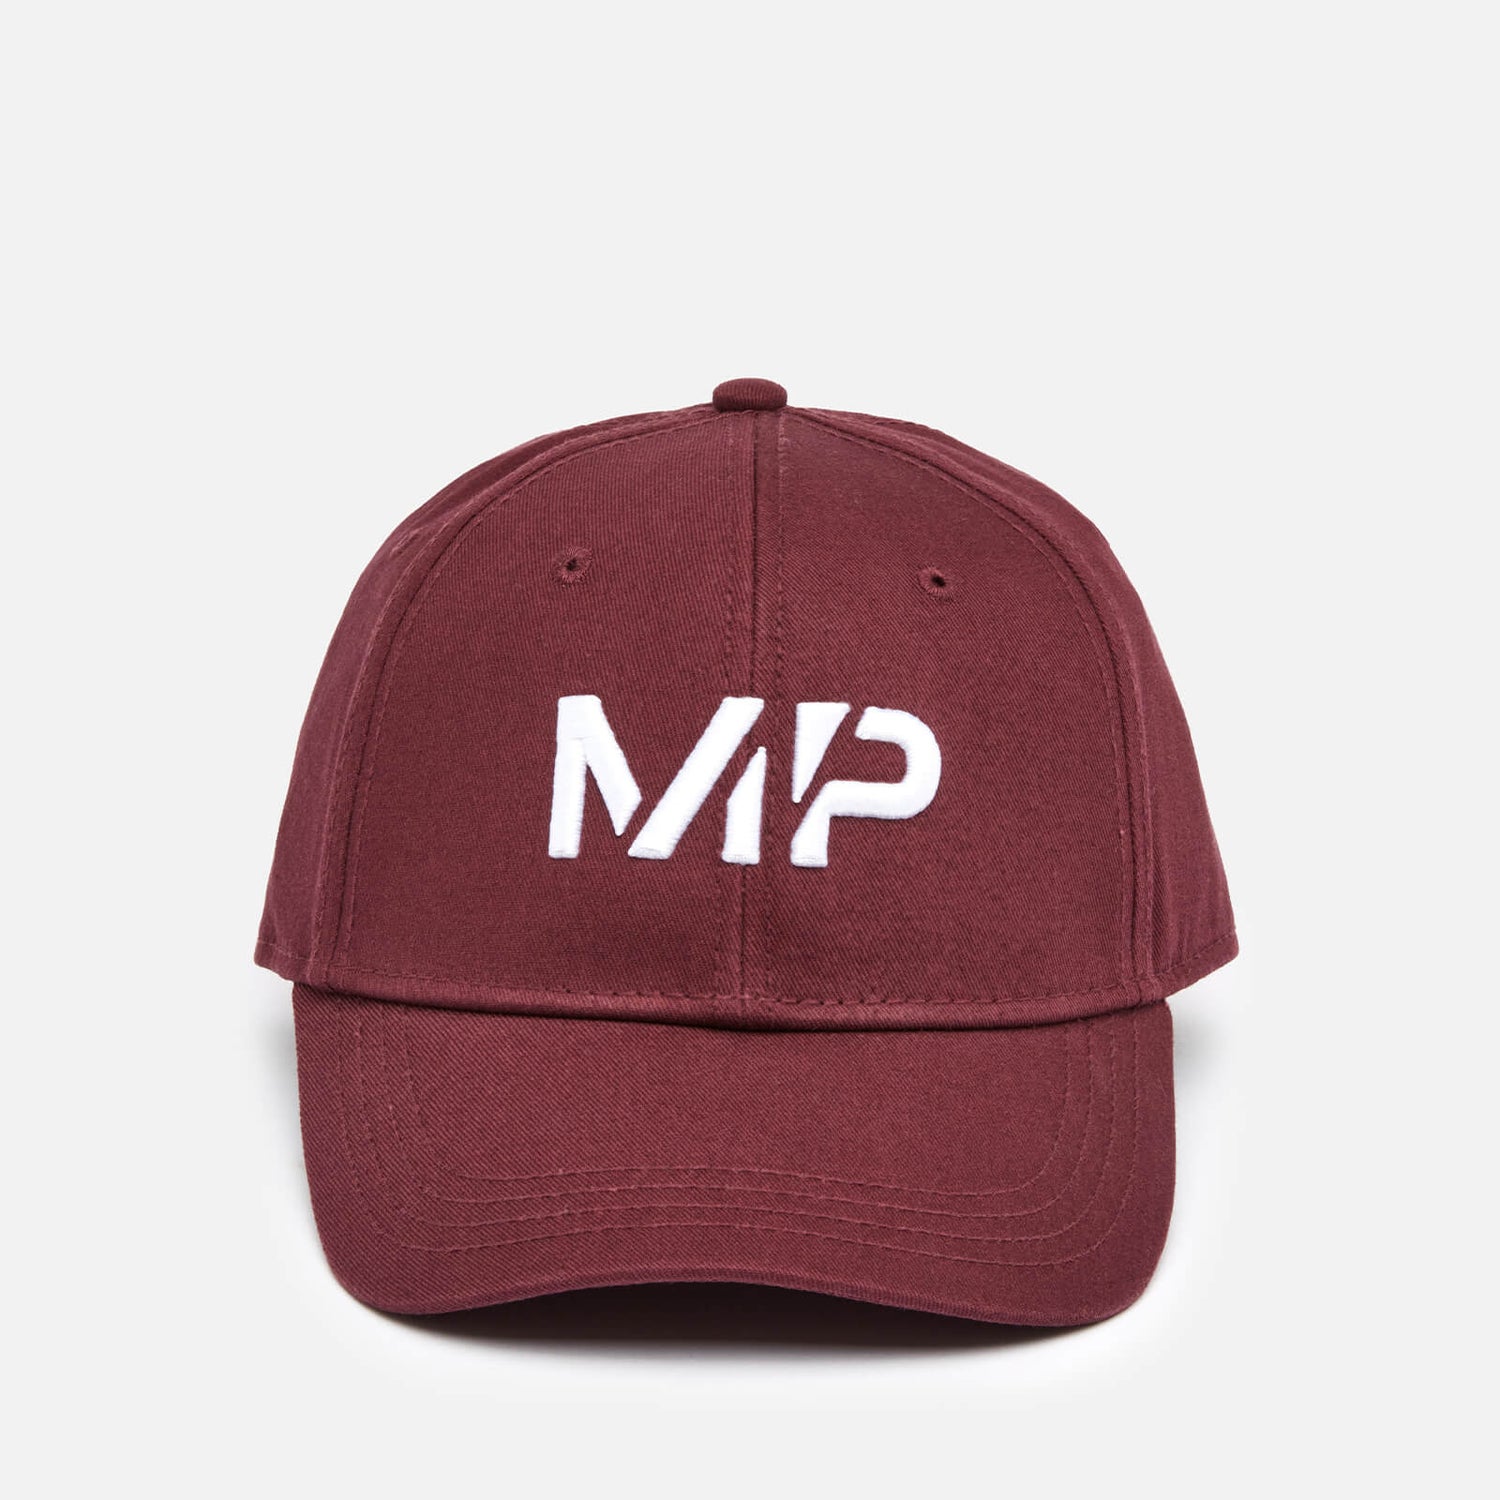 MP Baseball Cap - Washed Oxblood